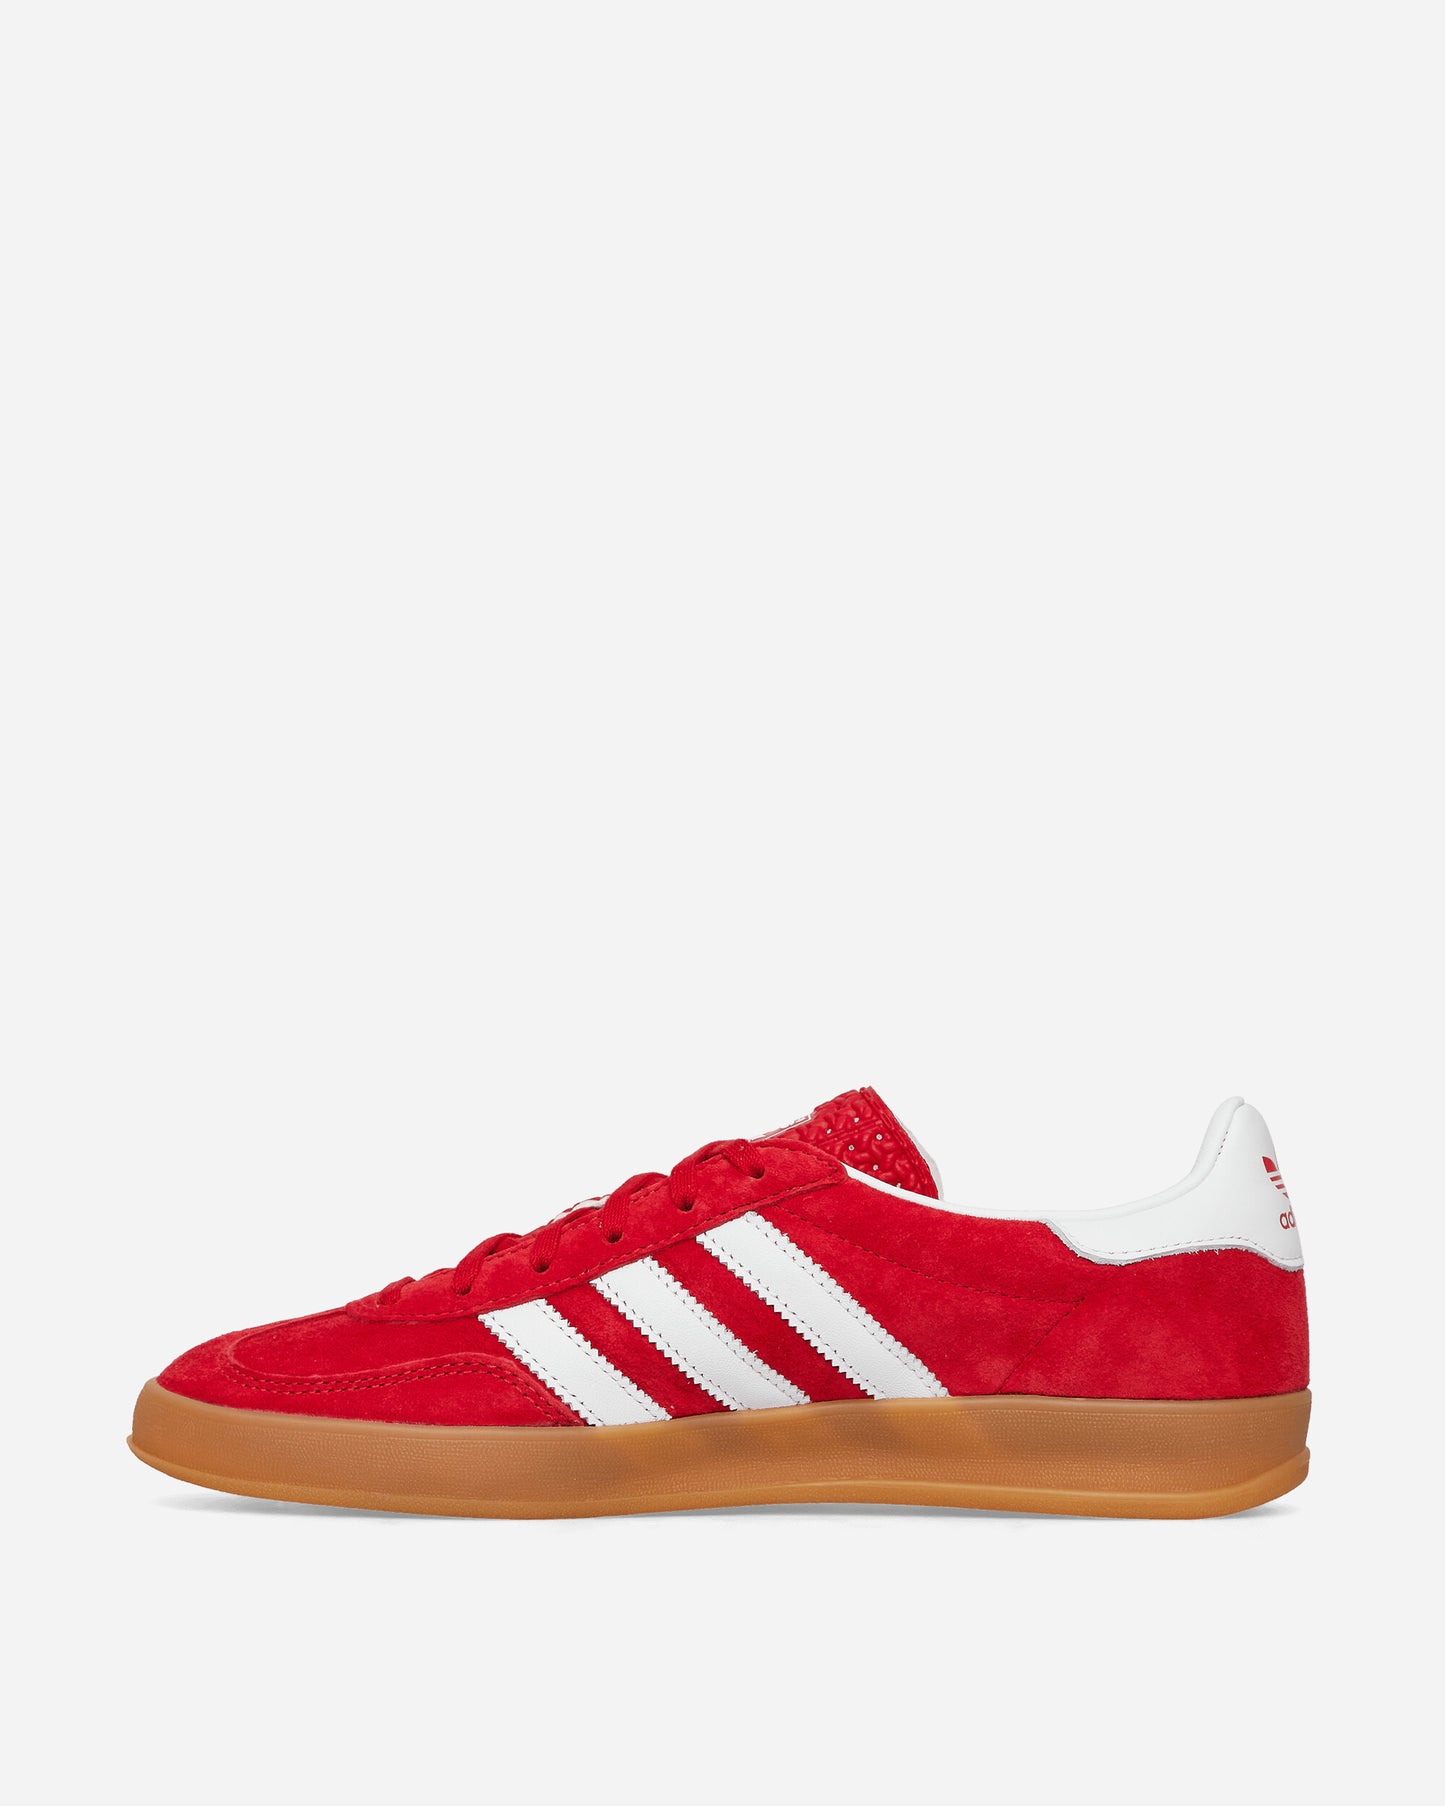 adidas Gazelle Indoor Scarlet/Ftwr White Sneakers Low H06261 001